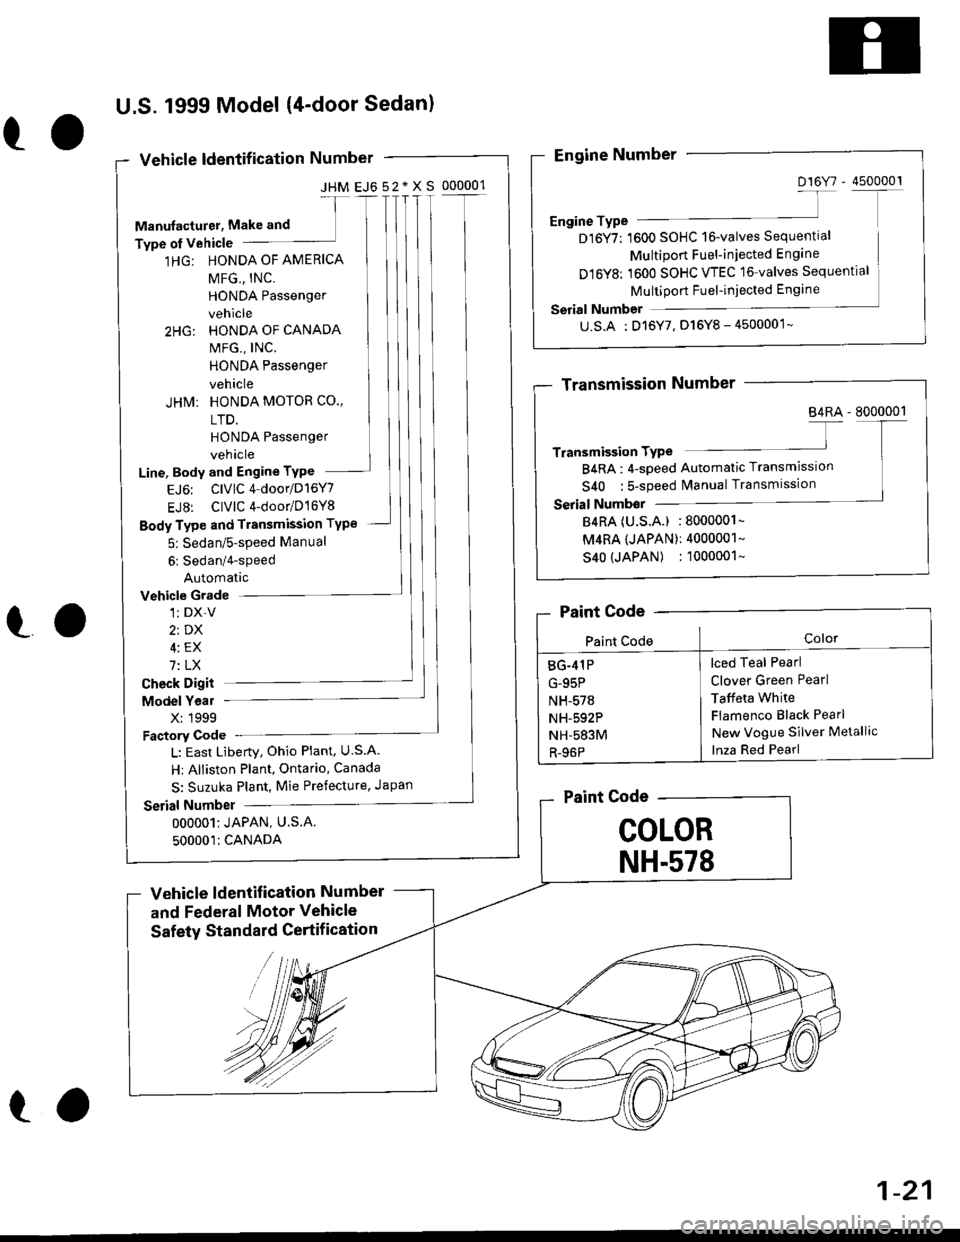 HONDA CIVIC 1998 6.G Owners Manual ro
U.S. 1999 Model (4door Sedan)
Vehicle ldentif ication Number
JHM EJ652*XS 000001-f
Manufacturel, Make and
Type ol vehicle
1HG: HONDA OF AMERICA
Vehicle Gradel: DX-V
2t DX
4: EX
7: LX
HONDA Passen